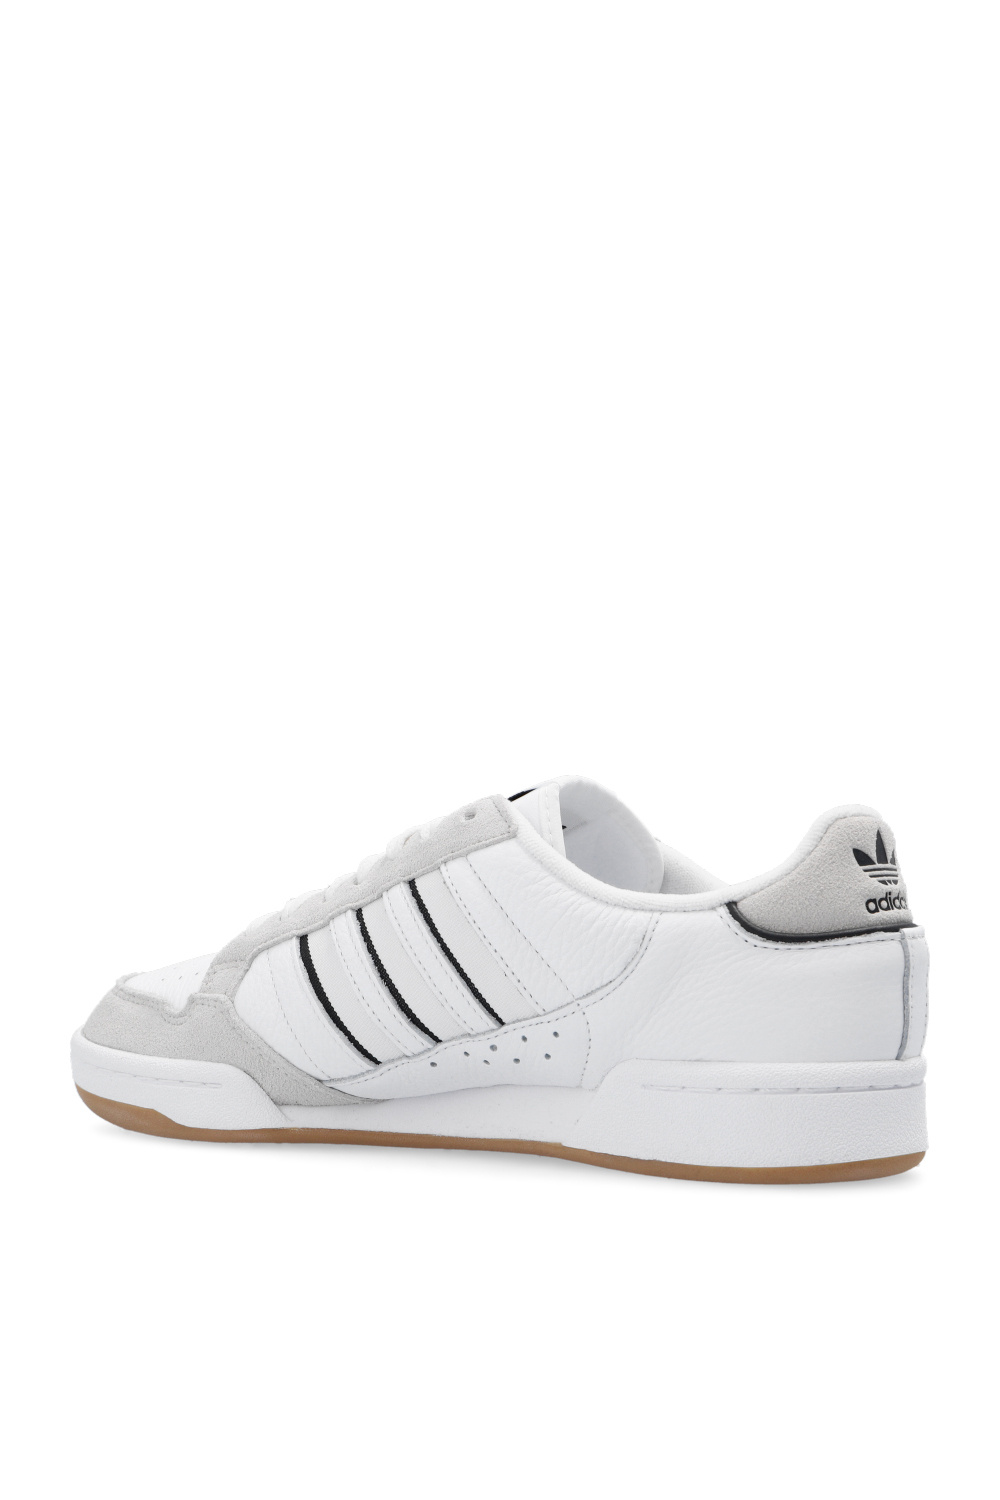 Beige \'Continental 80 Stripes\' sneakers ADIDAS Originals - StclaircomoShops  Germany - adidas Originals 2971